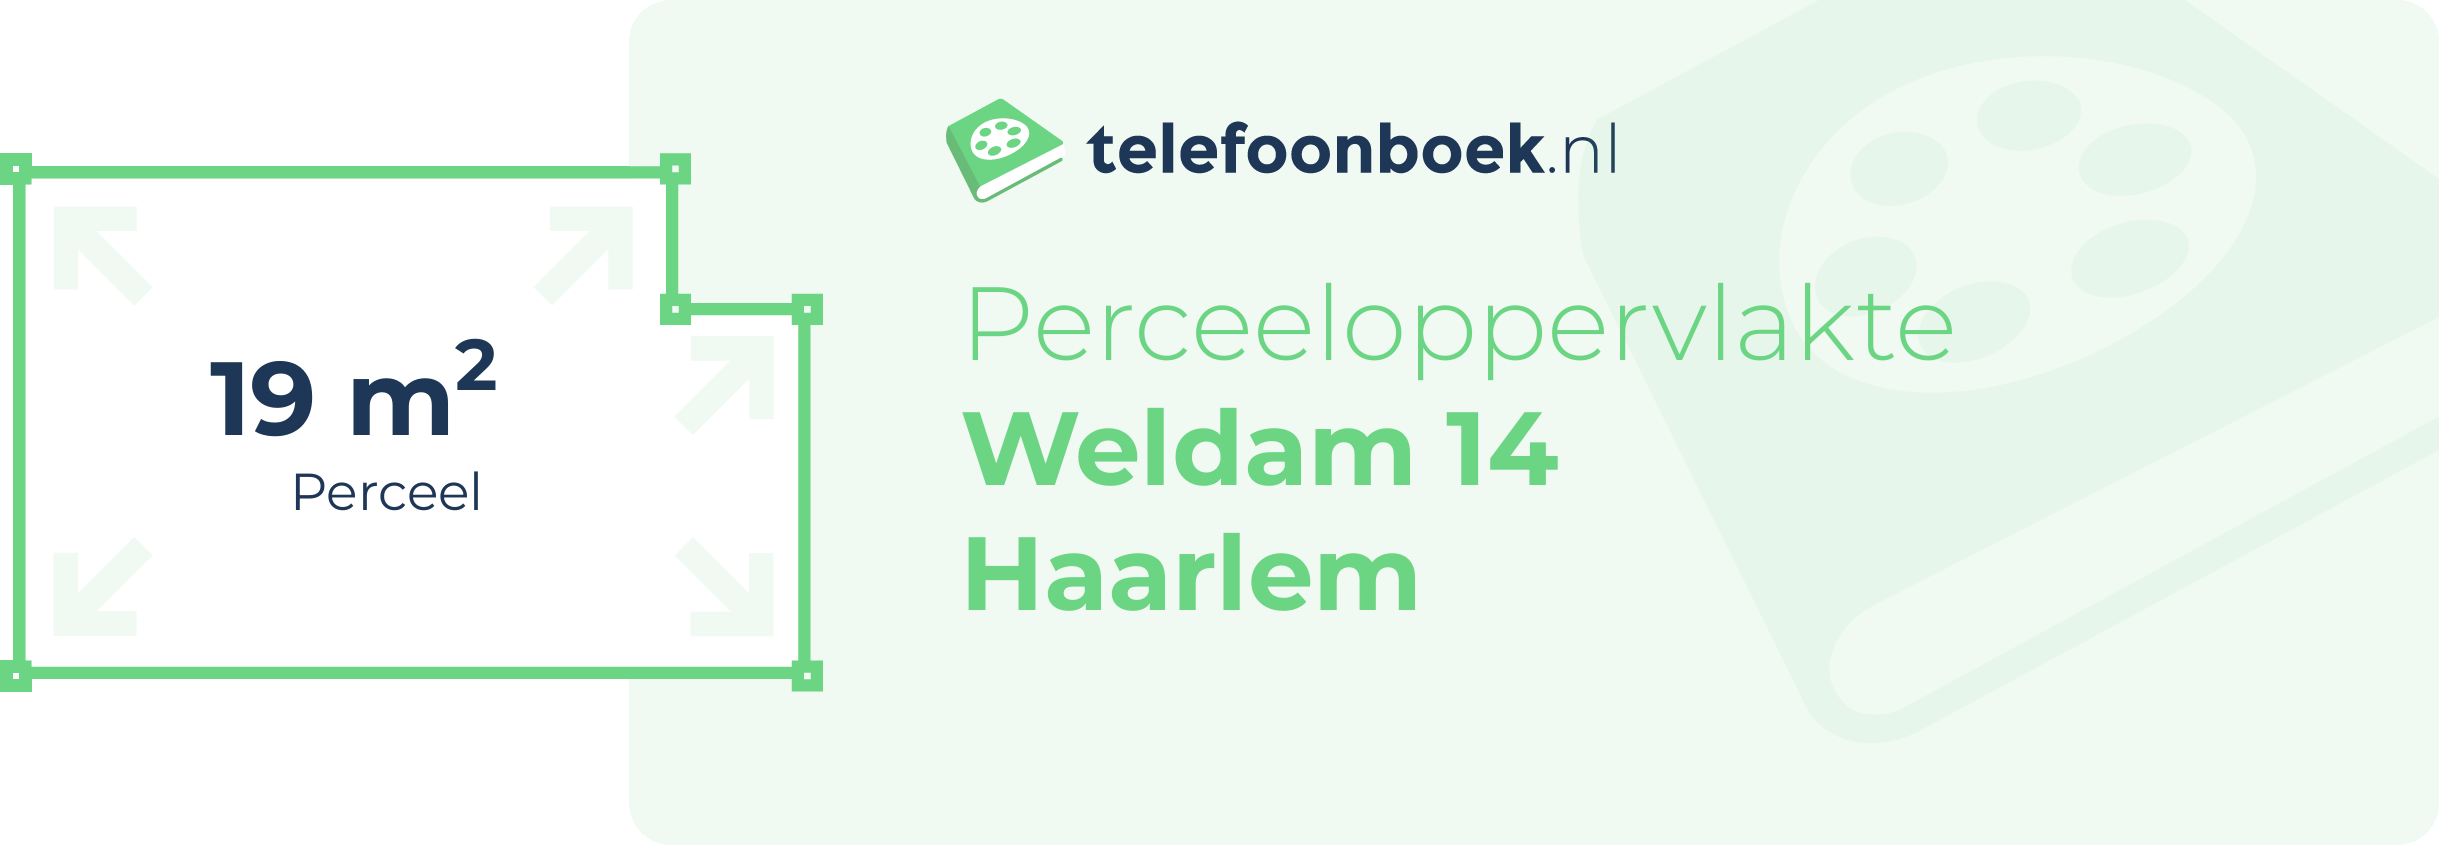 Perceeloppervlakte Weldam 14 Haarlem